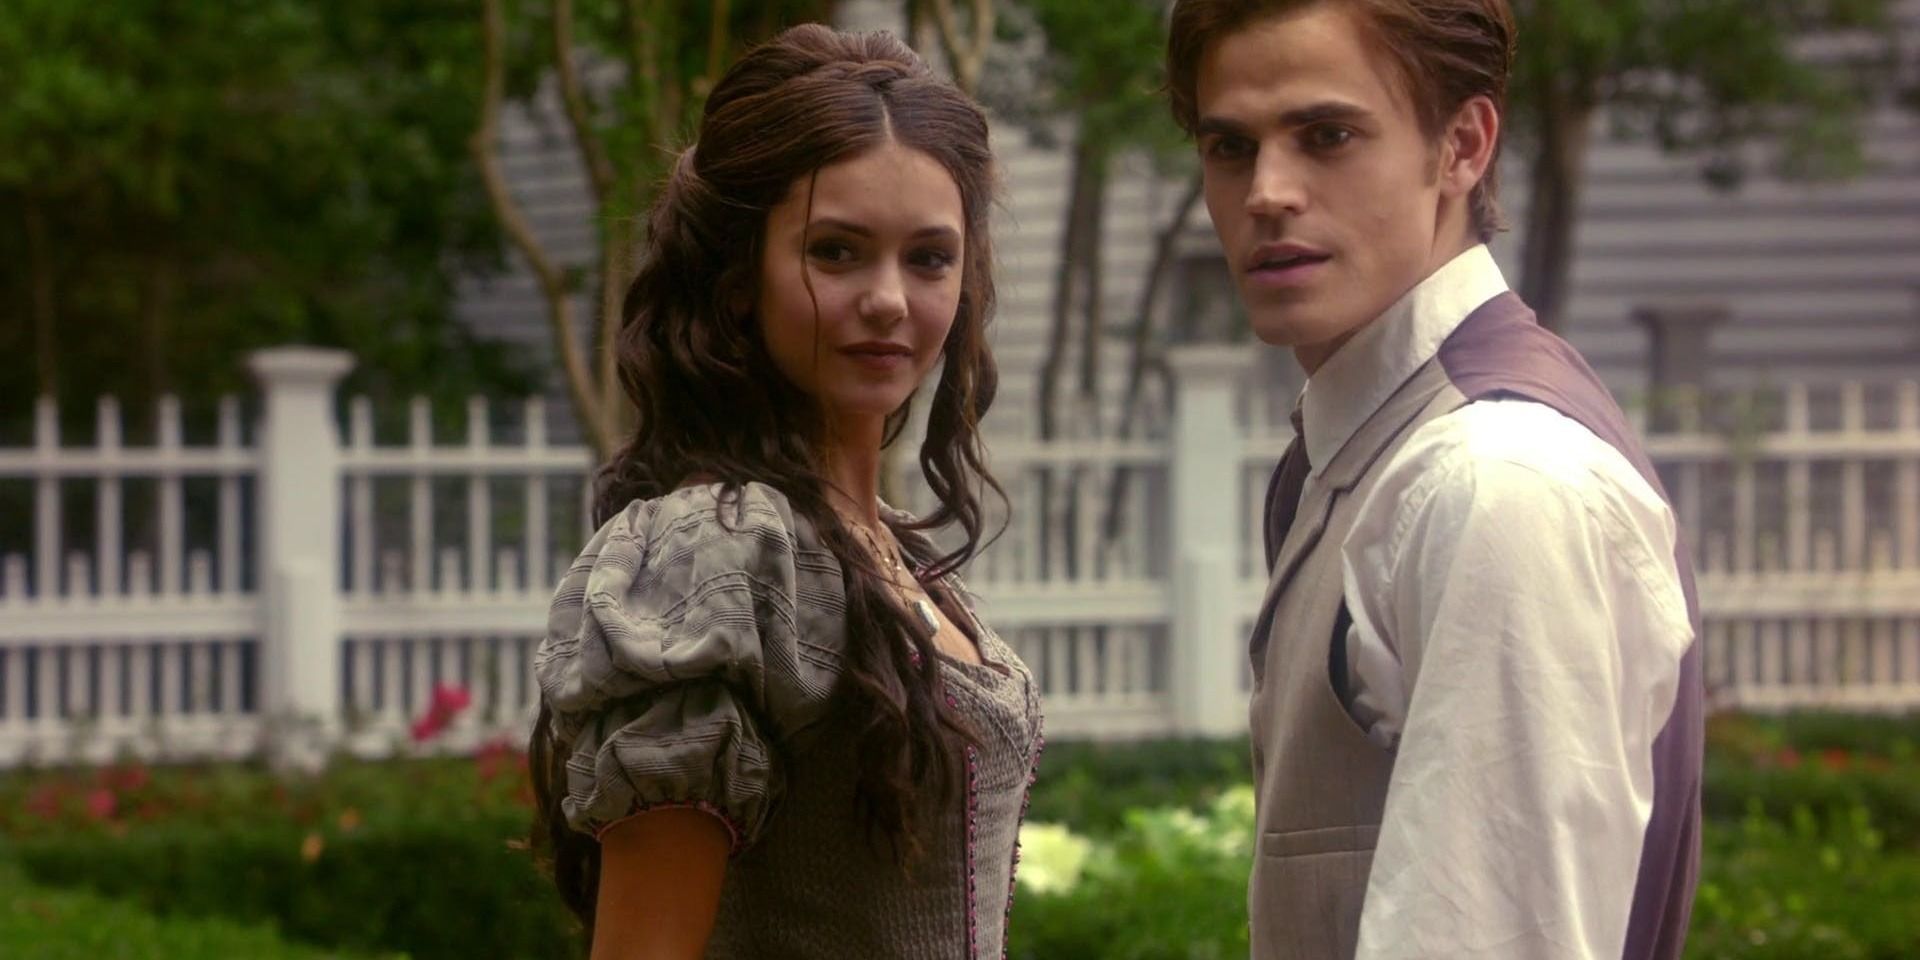 Stefan e Katherine juntos em Mystic Falls em The Vampire Diaries